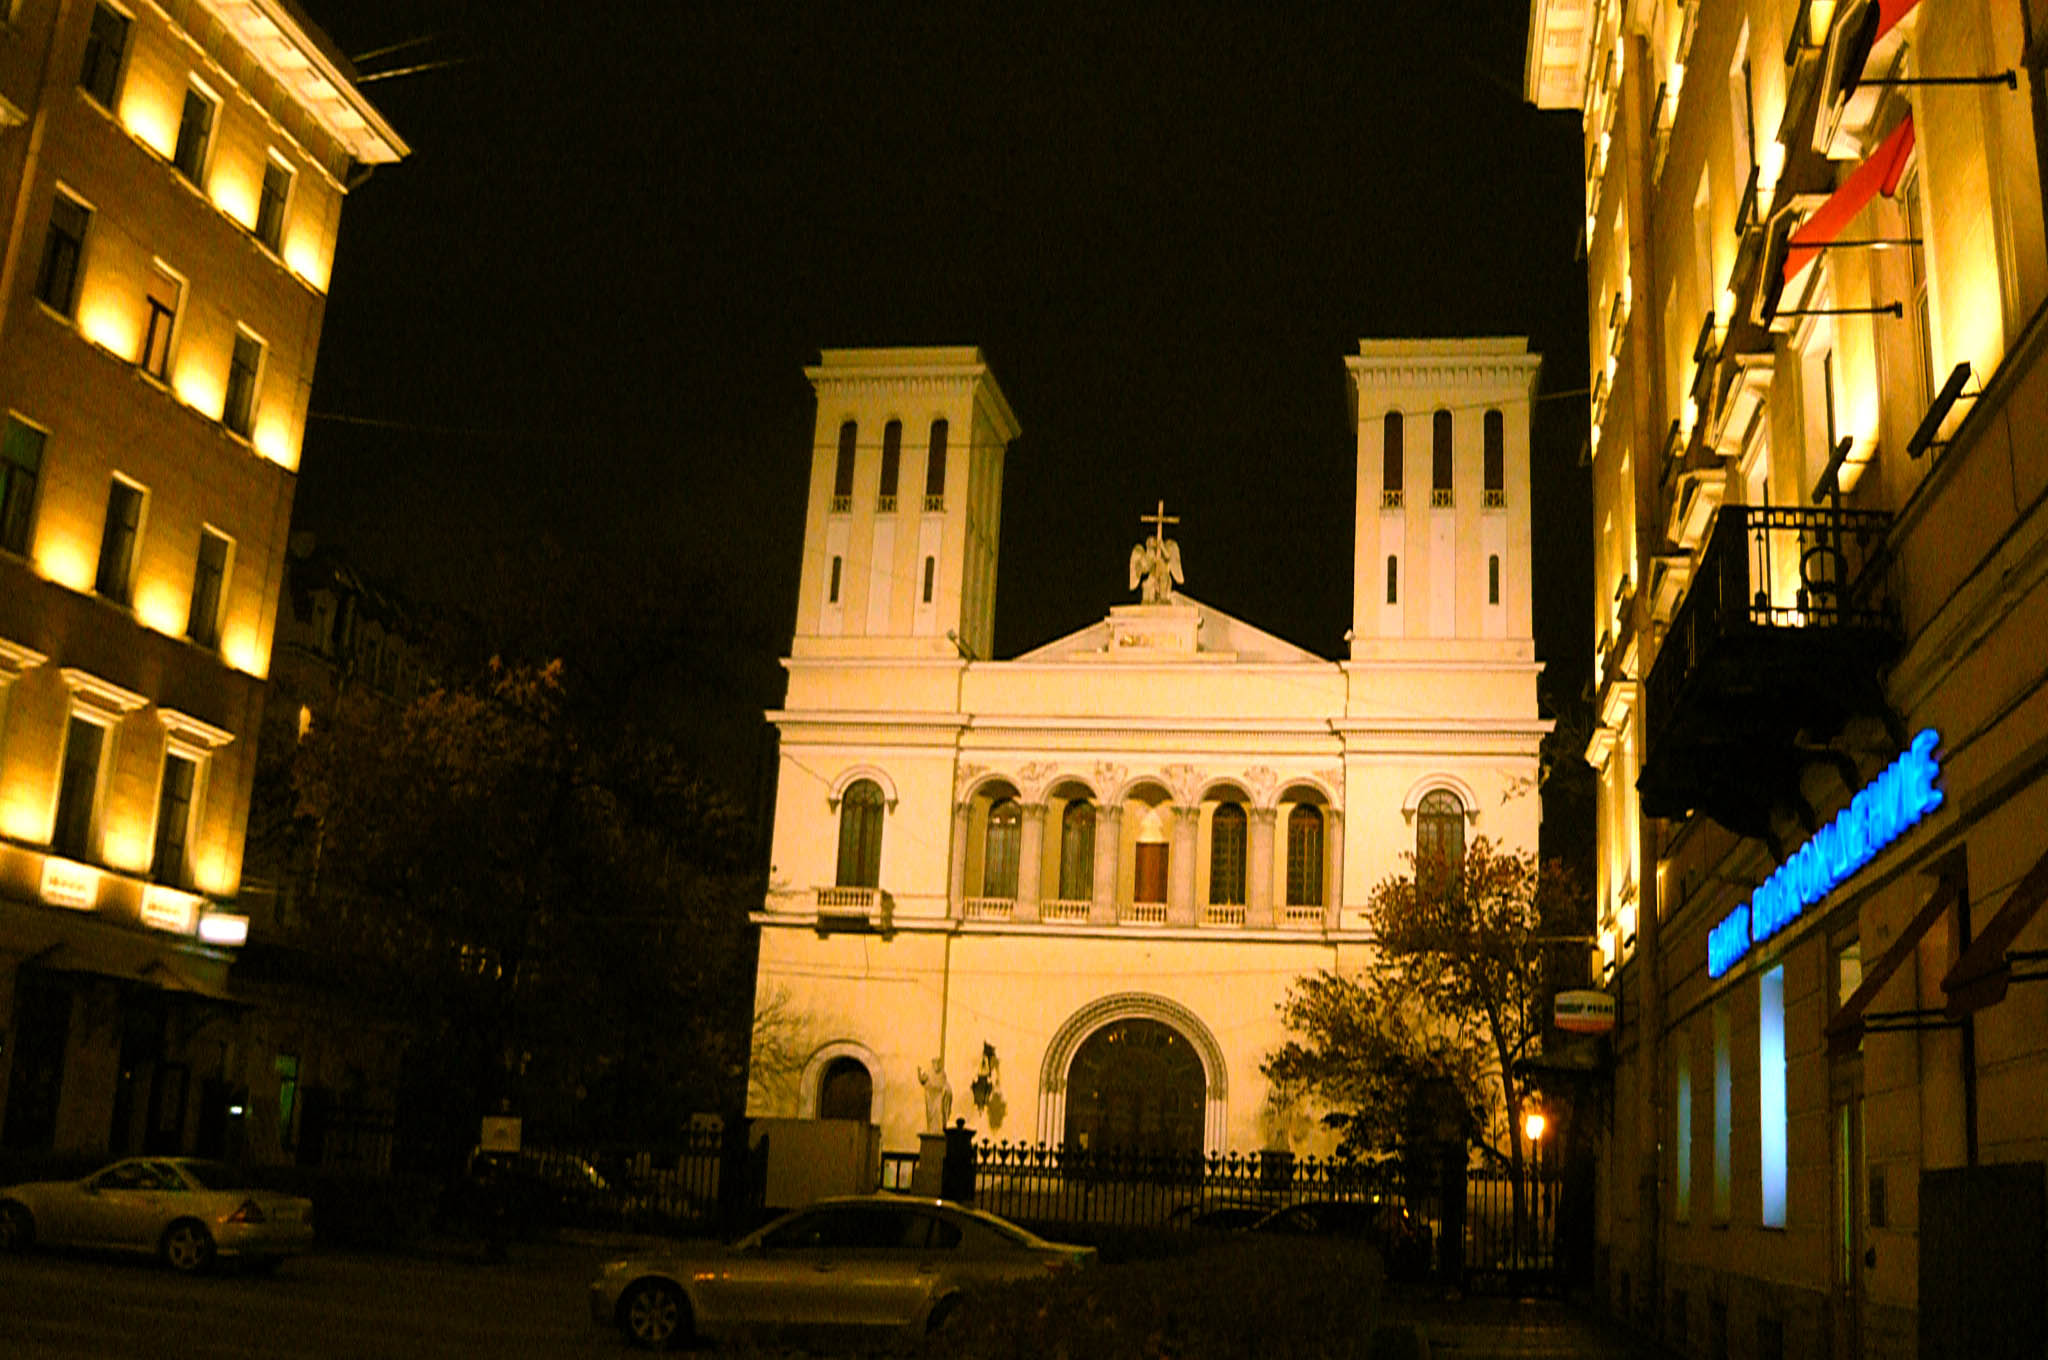 Lutheran church at Saint-Petersburg [Alexander Shemetev]